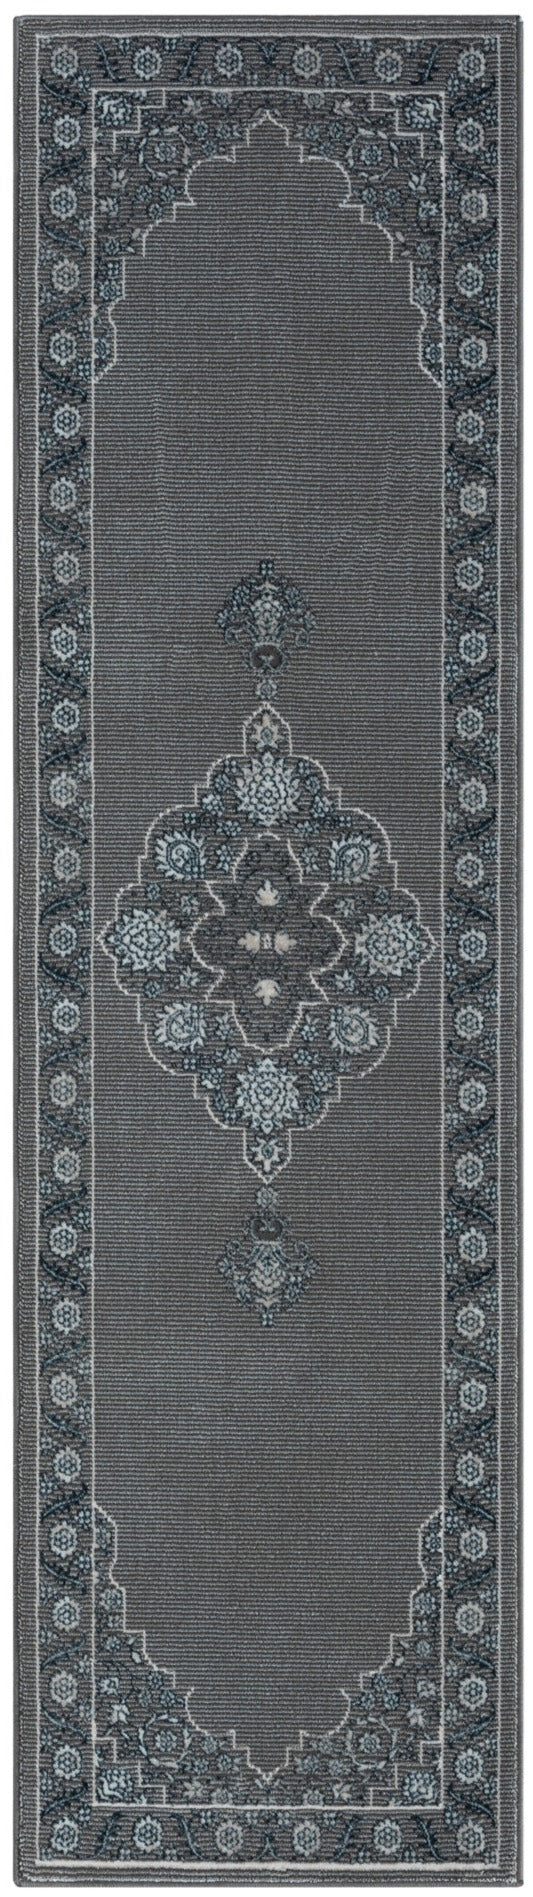 American cover design / Persian weavers Boutique 452 Graphite Rug